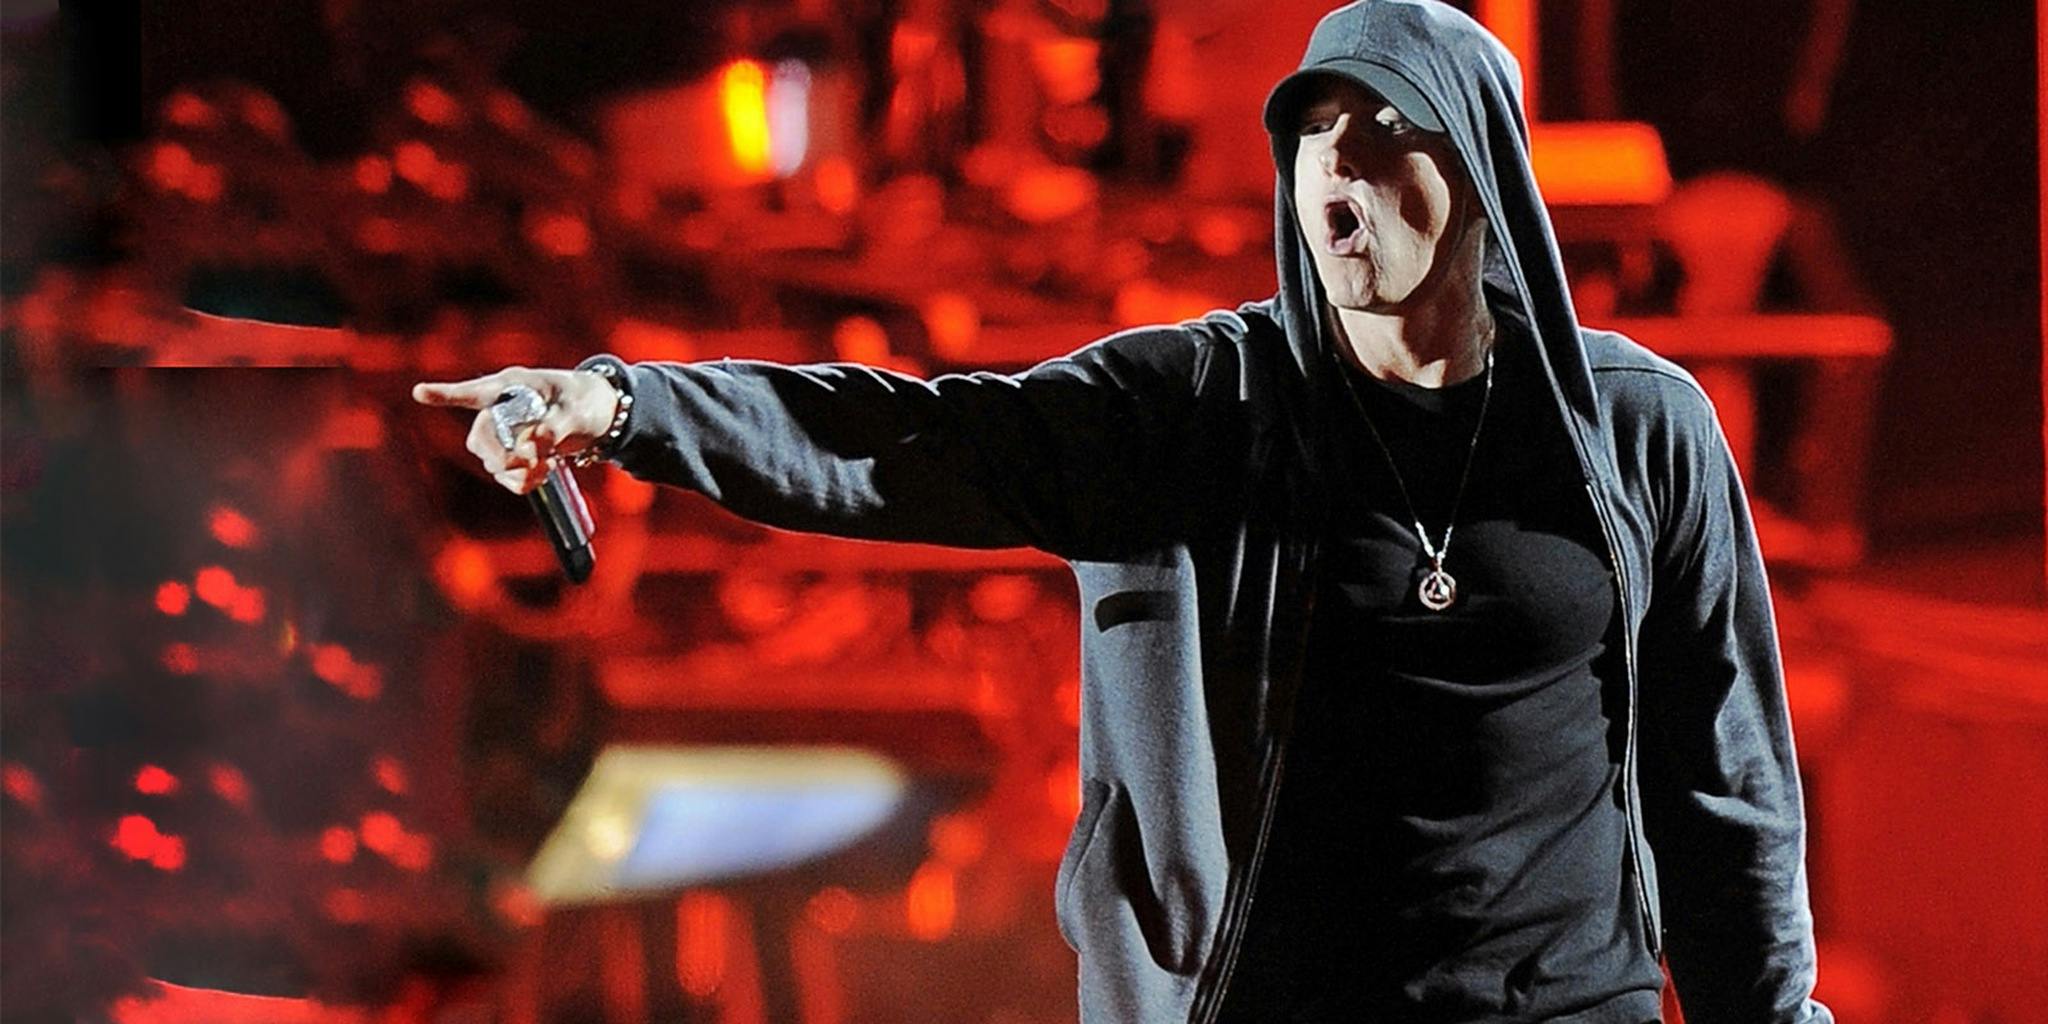 Eminem Announces New Album With Epic 7Minute Donald Trump Diss Track